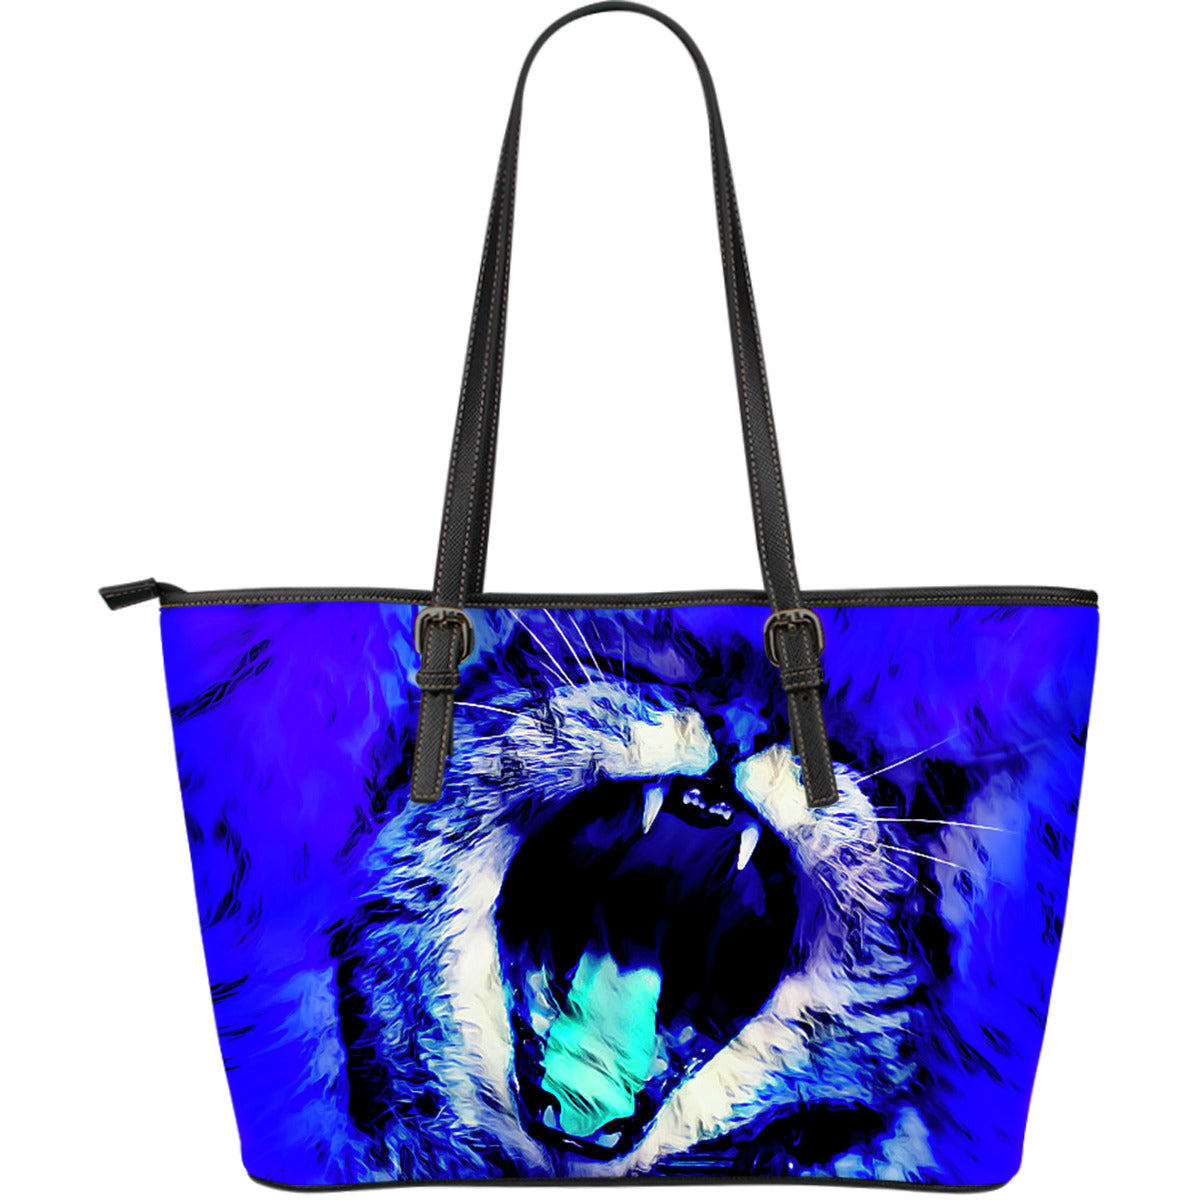 Blue Wild Cat Leather Tote Bag - Hello Moa